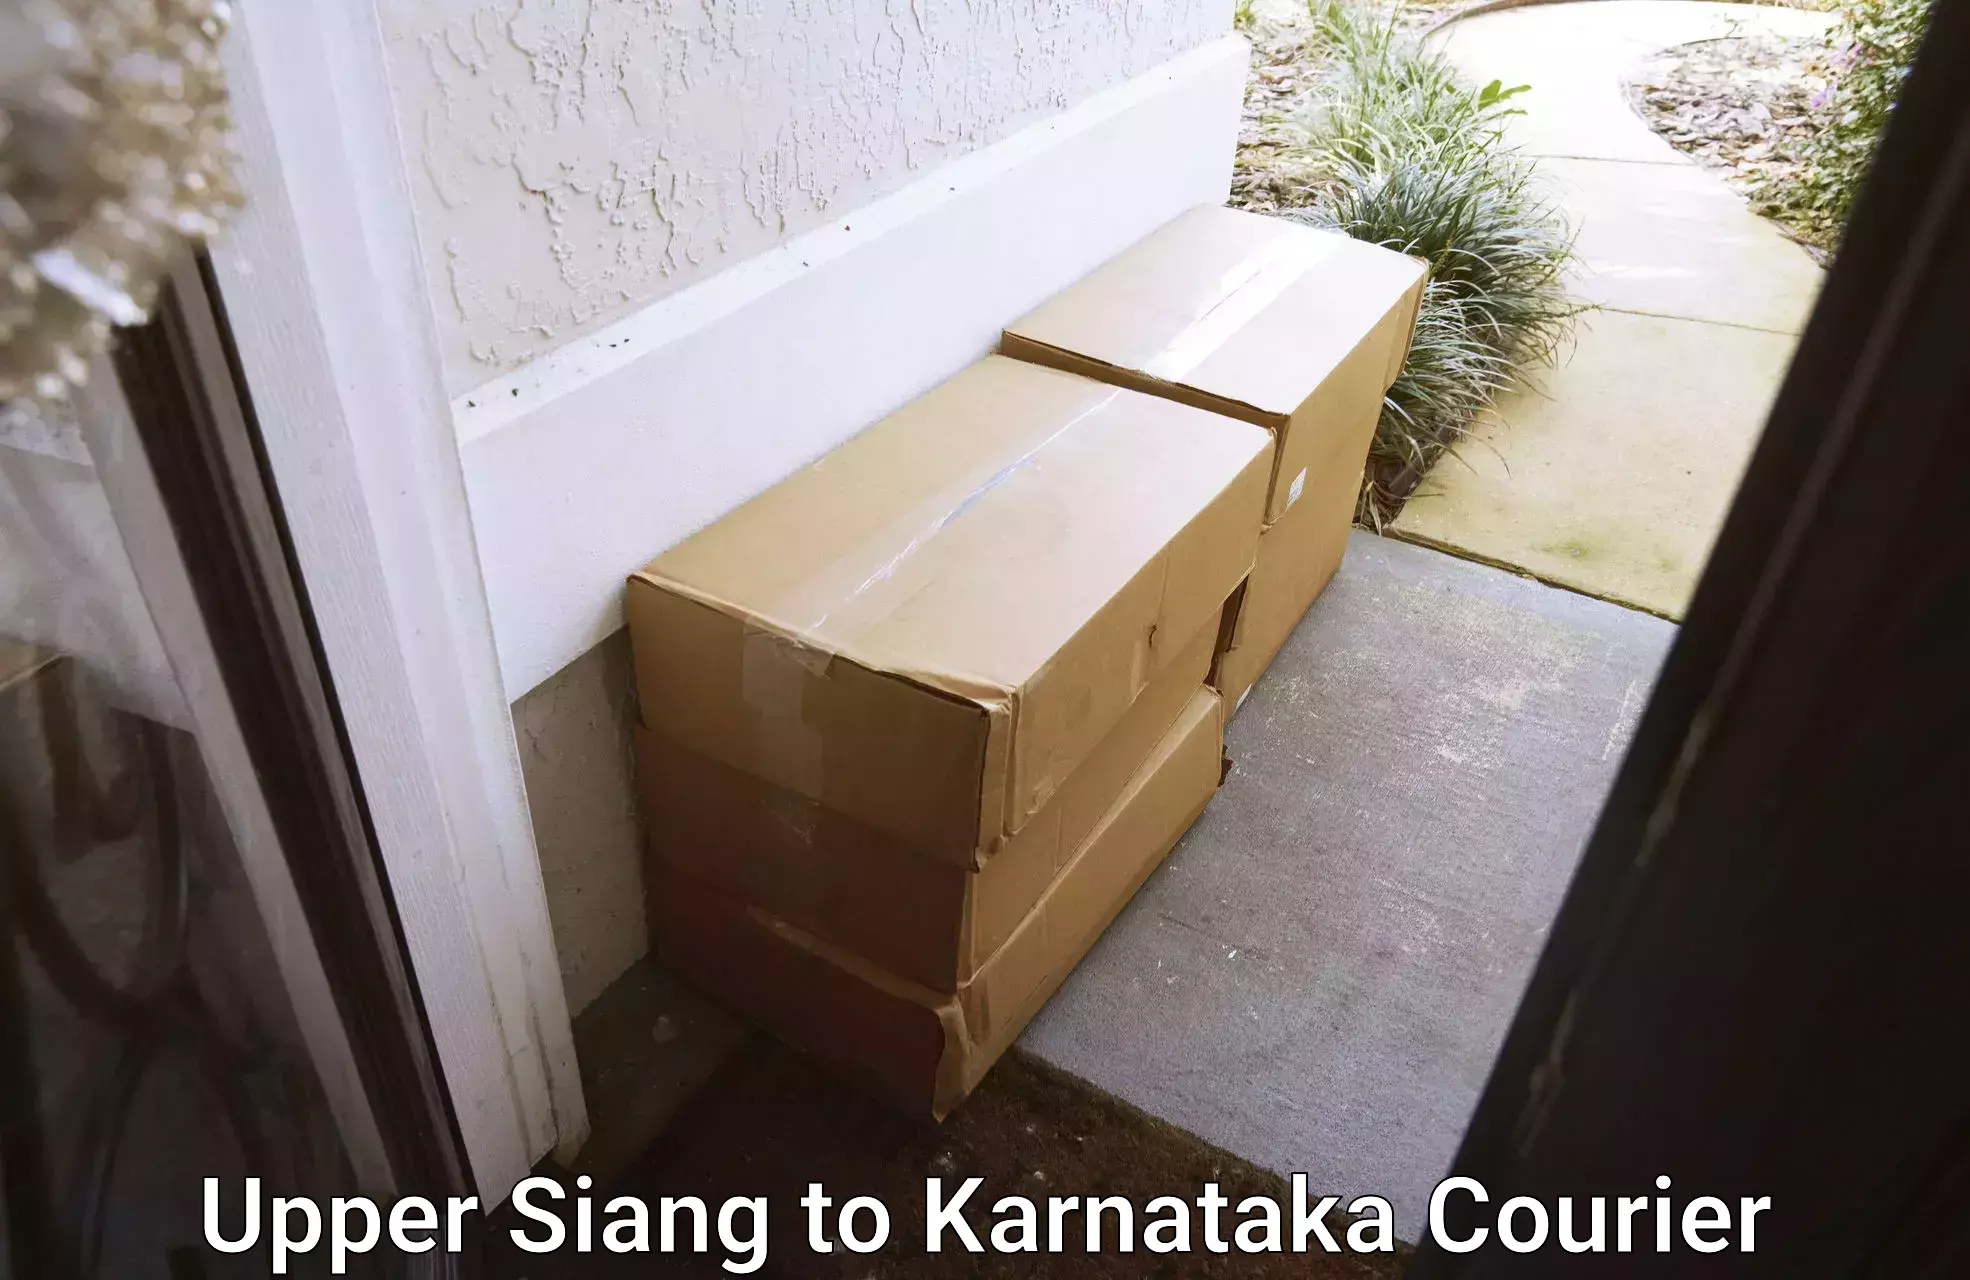 Next day courier Upper Siang to Karnataka